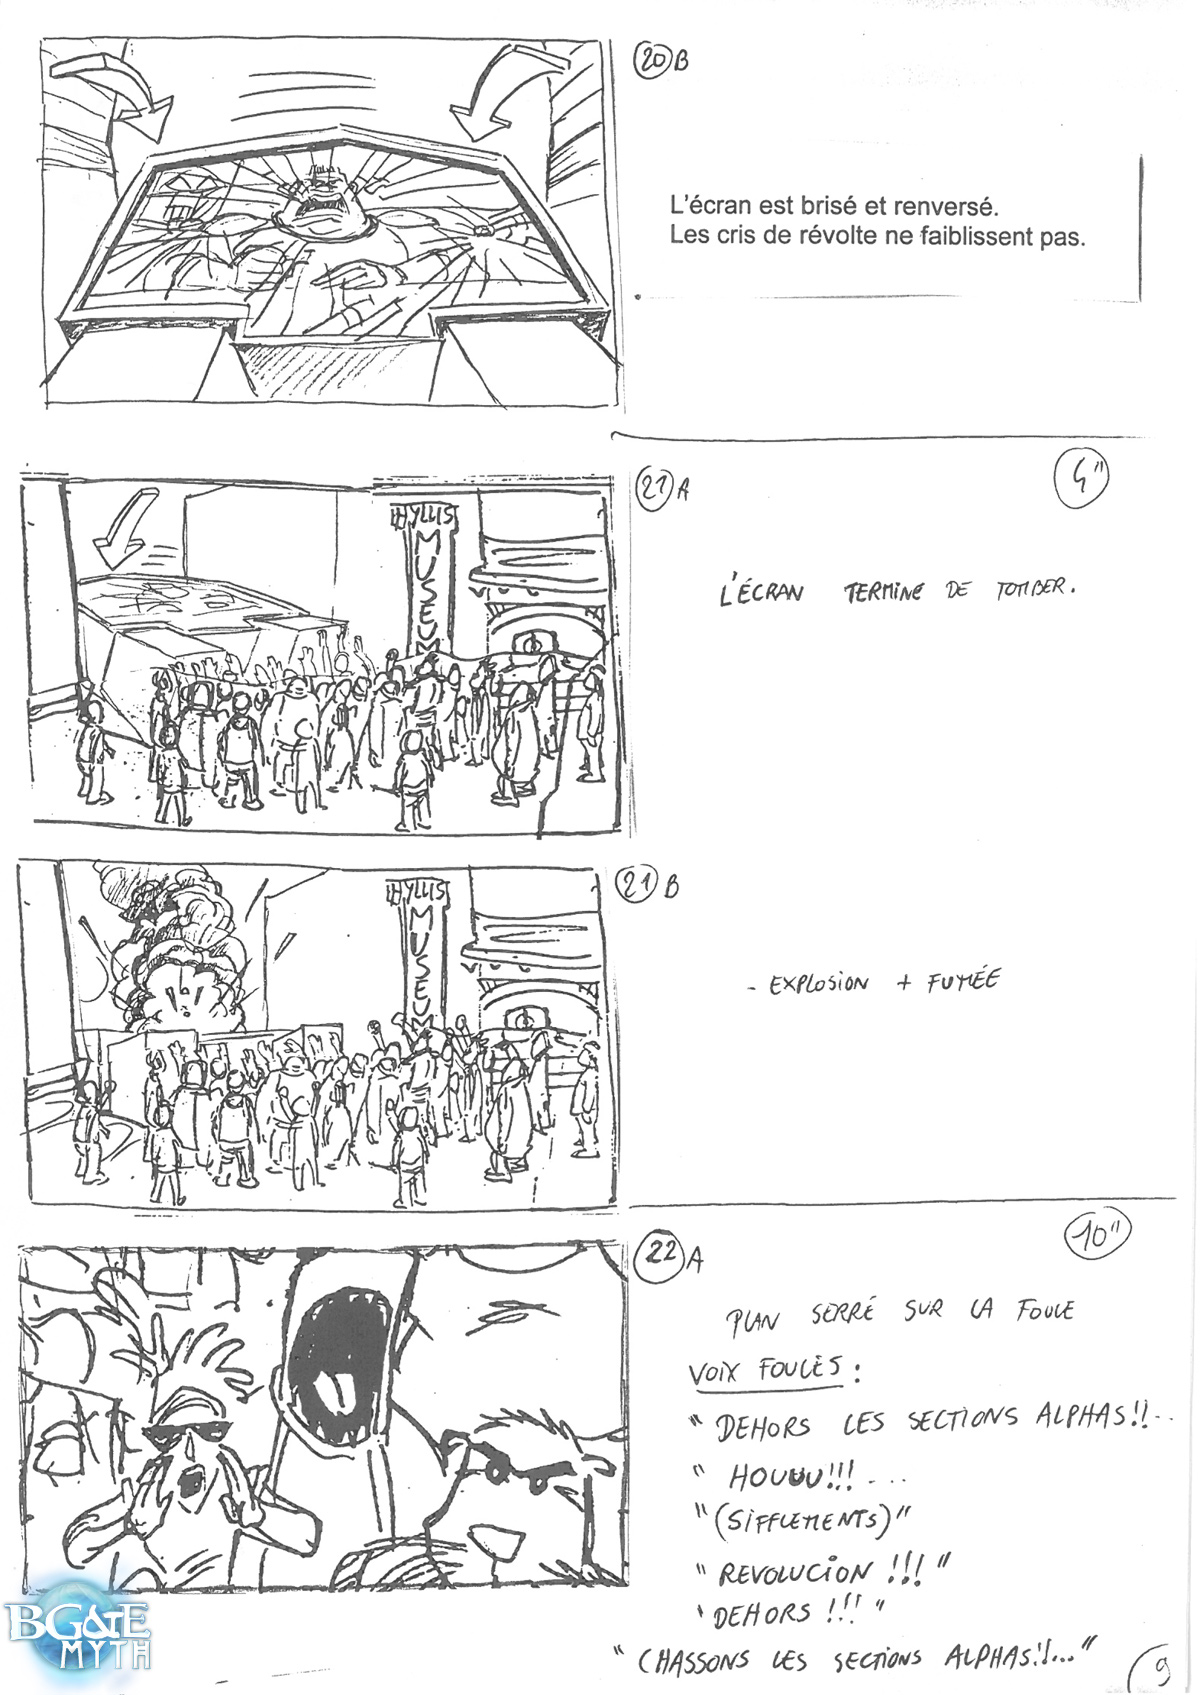 [Storyboard] Diffusion du reportage - Page 16